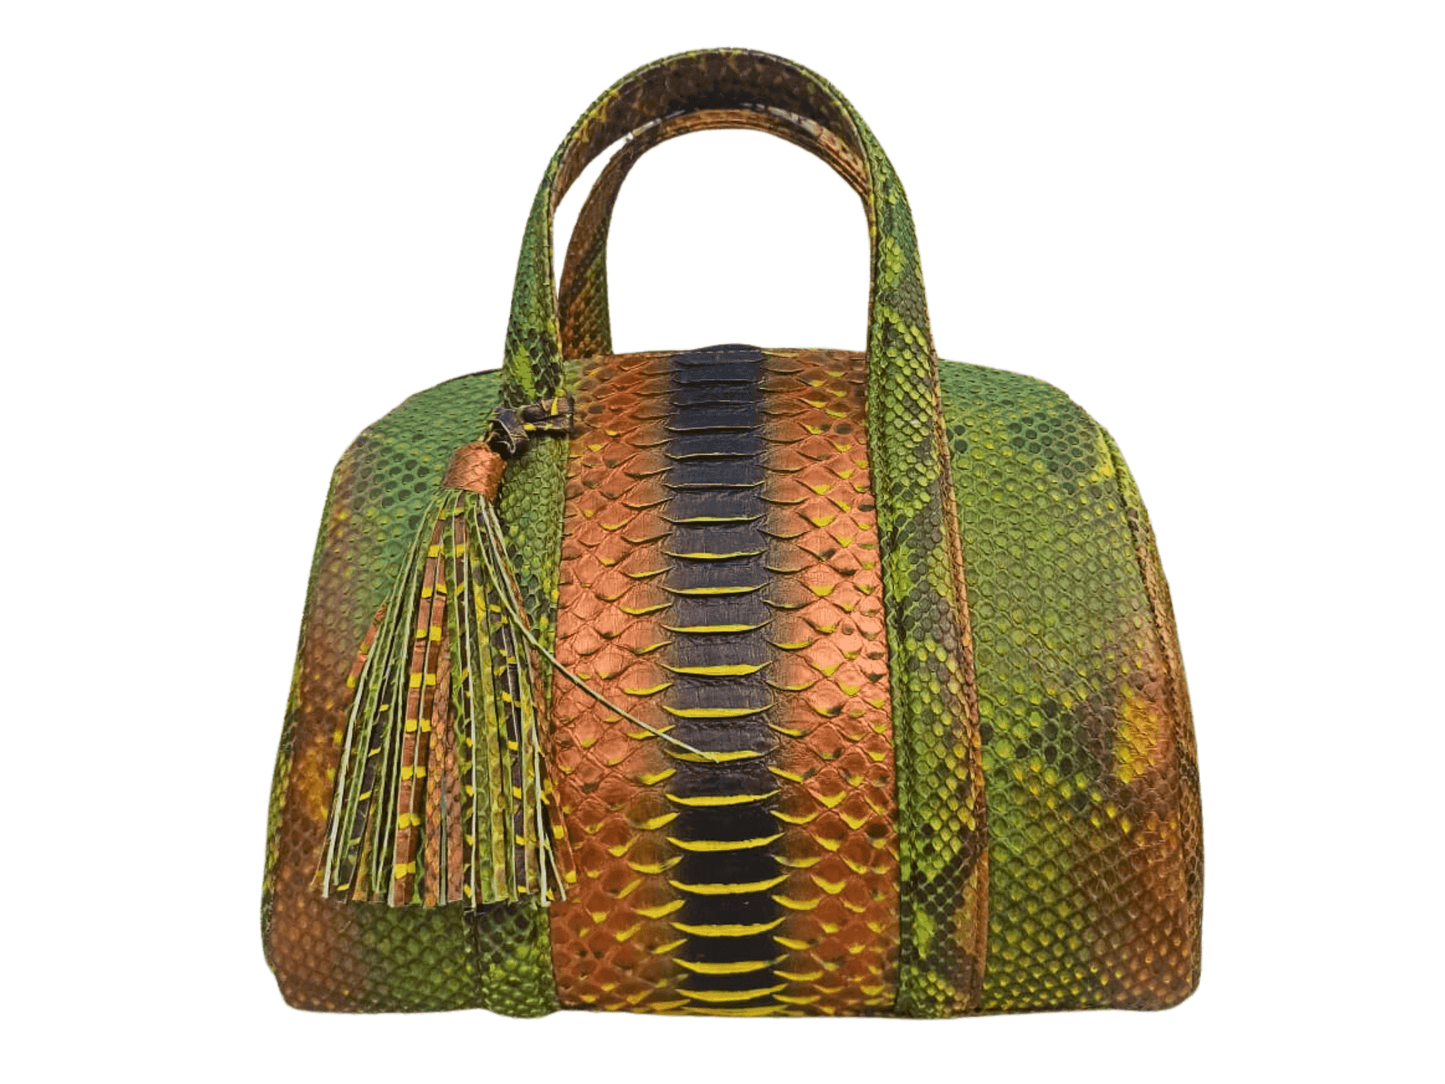 Snakeskin Bowler Bag Green Python Jacket by LFM Fashion